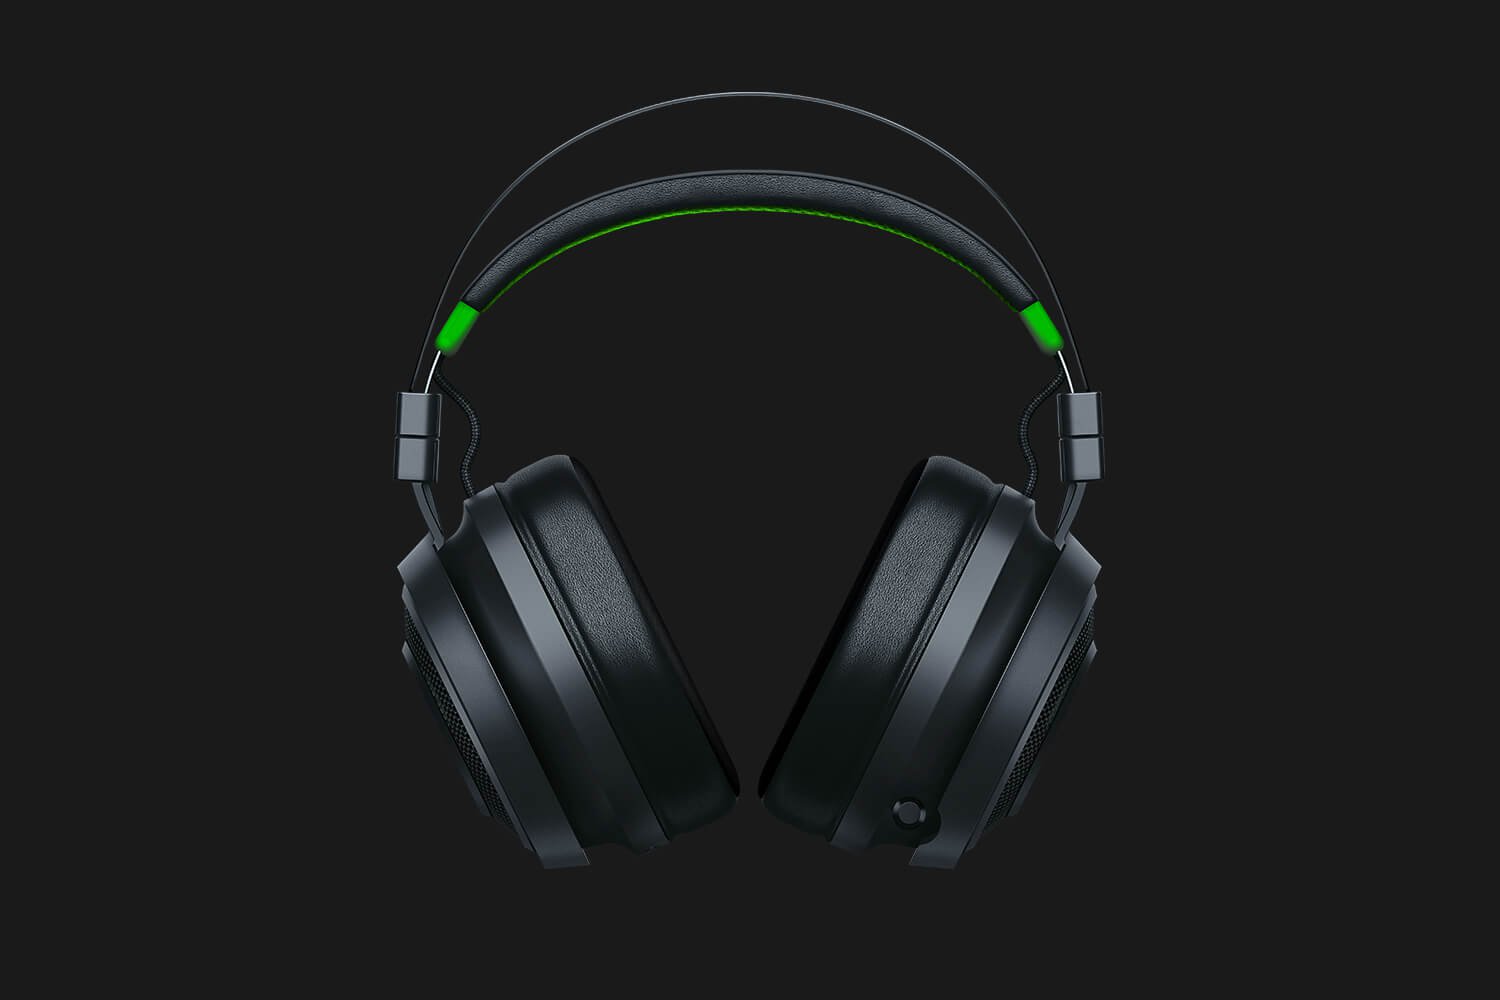 Razer Nari Ultimate Wireless Headset Xbox & PC